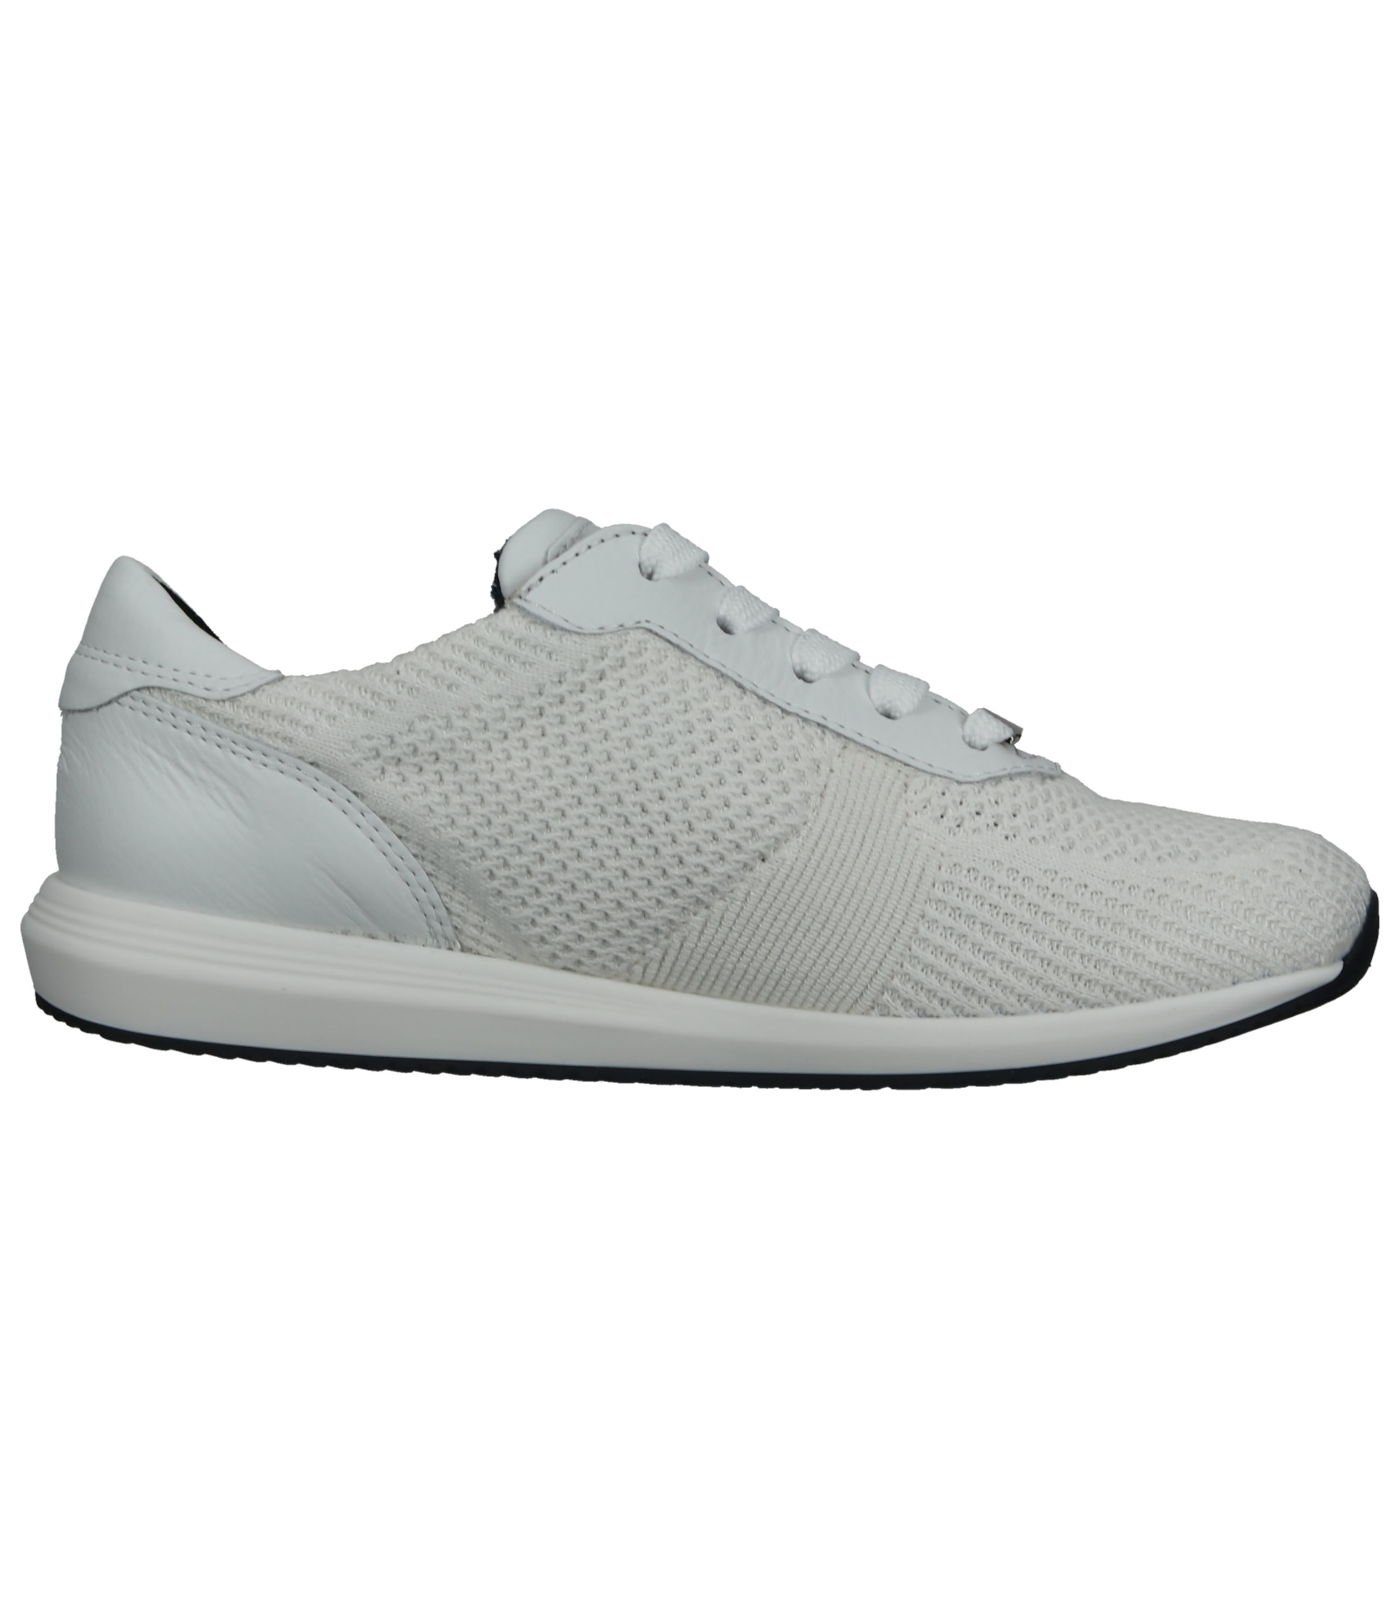 Lederimitat/Textil Sneaker weiß 047910 Ara Sneaker